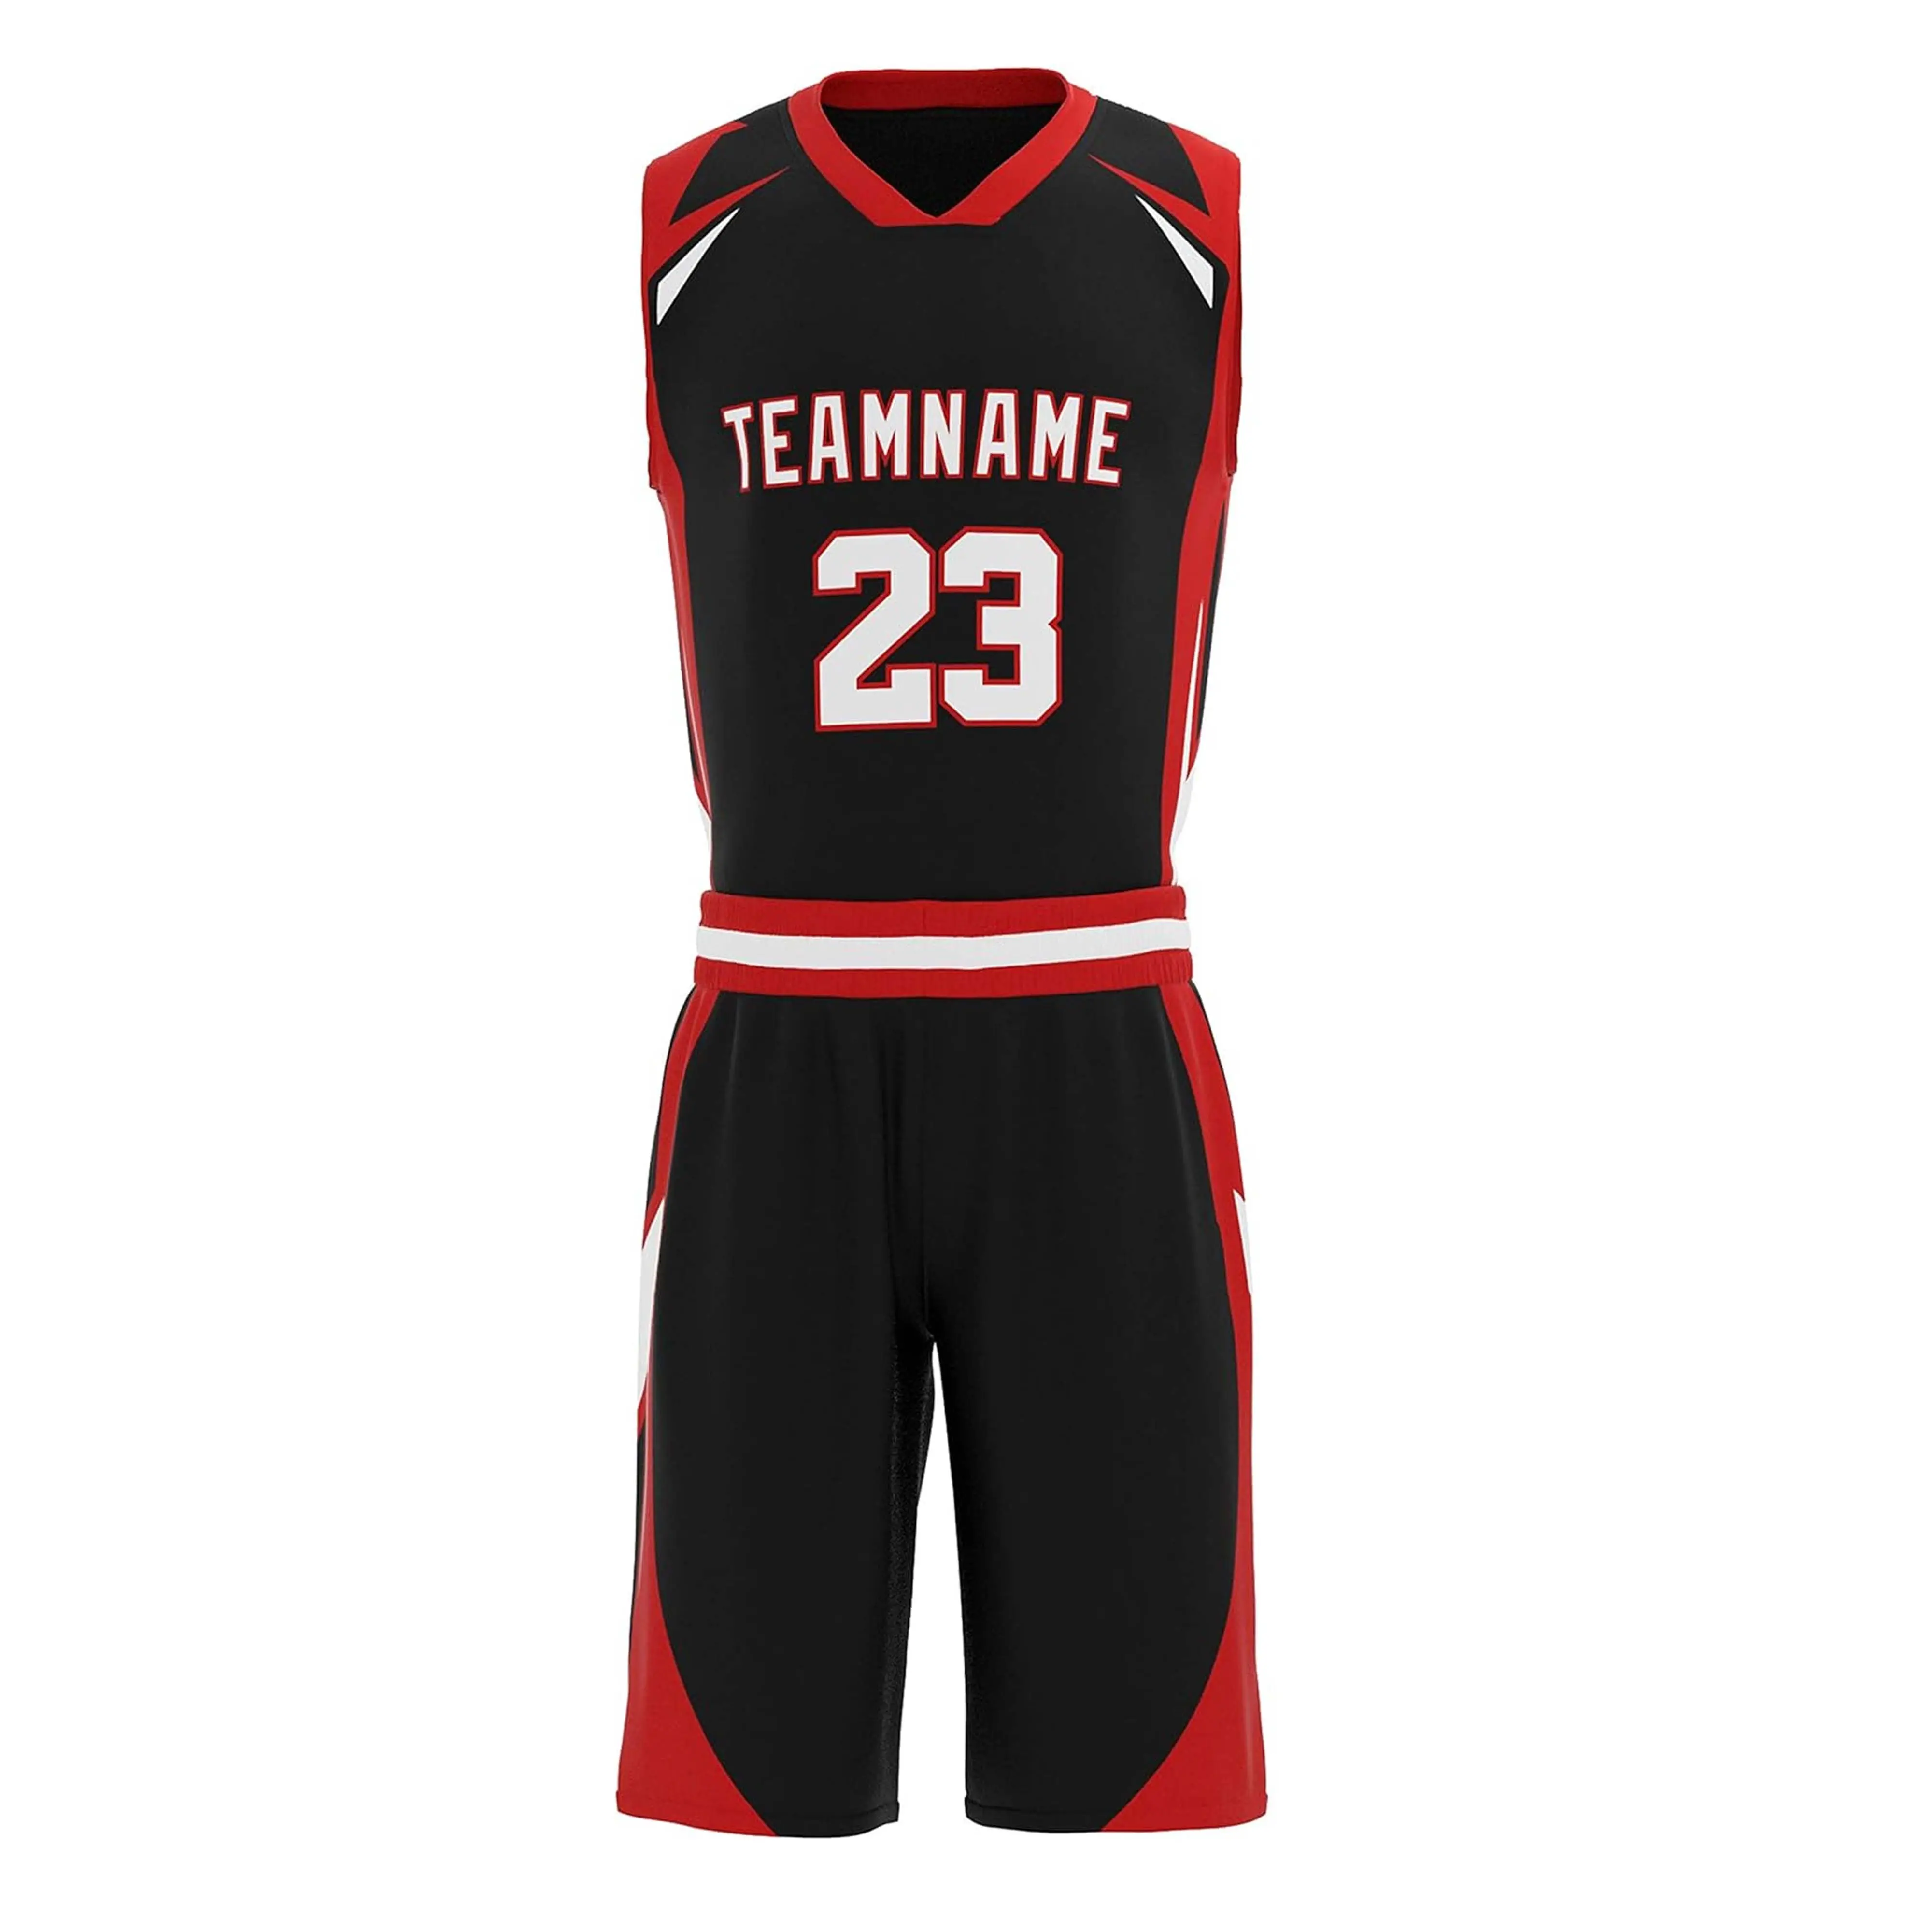 Camiseta de baloncesto de uniforme al por mayor personalizada de fábrica, camiseta de baloncesto de uniforme, uniforme de baloncesto a precio barato